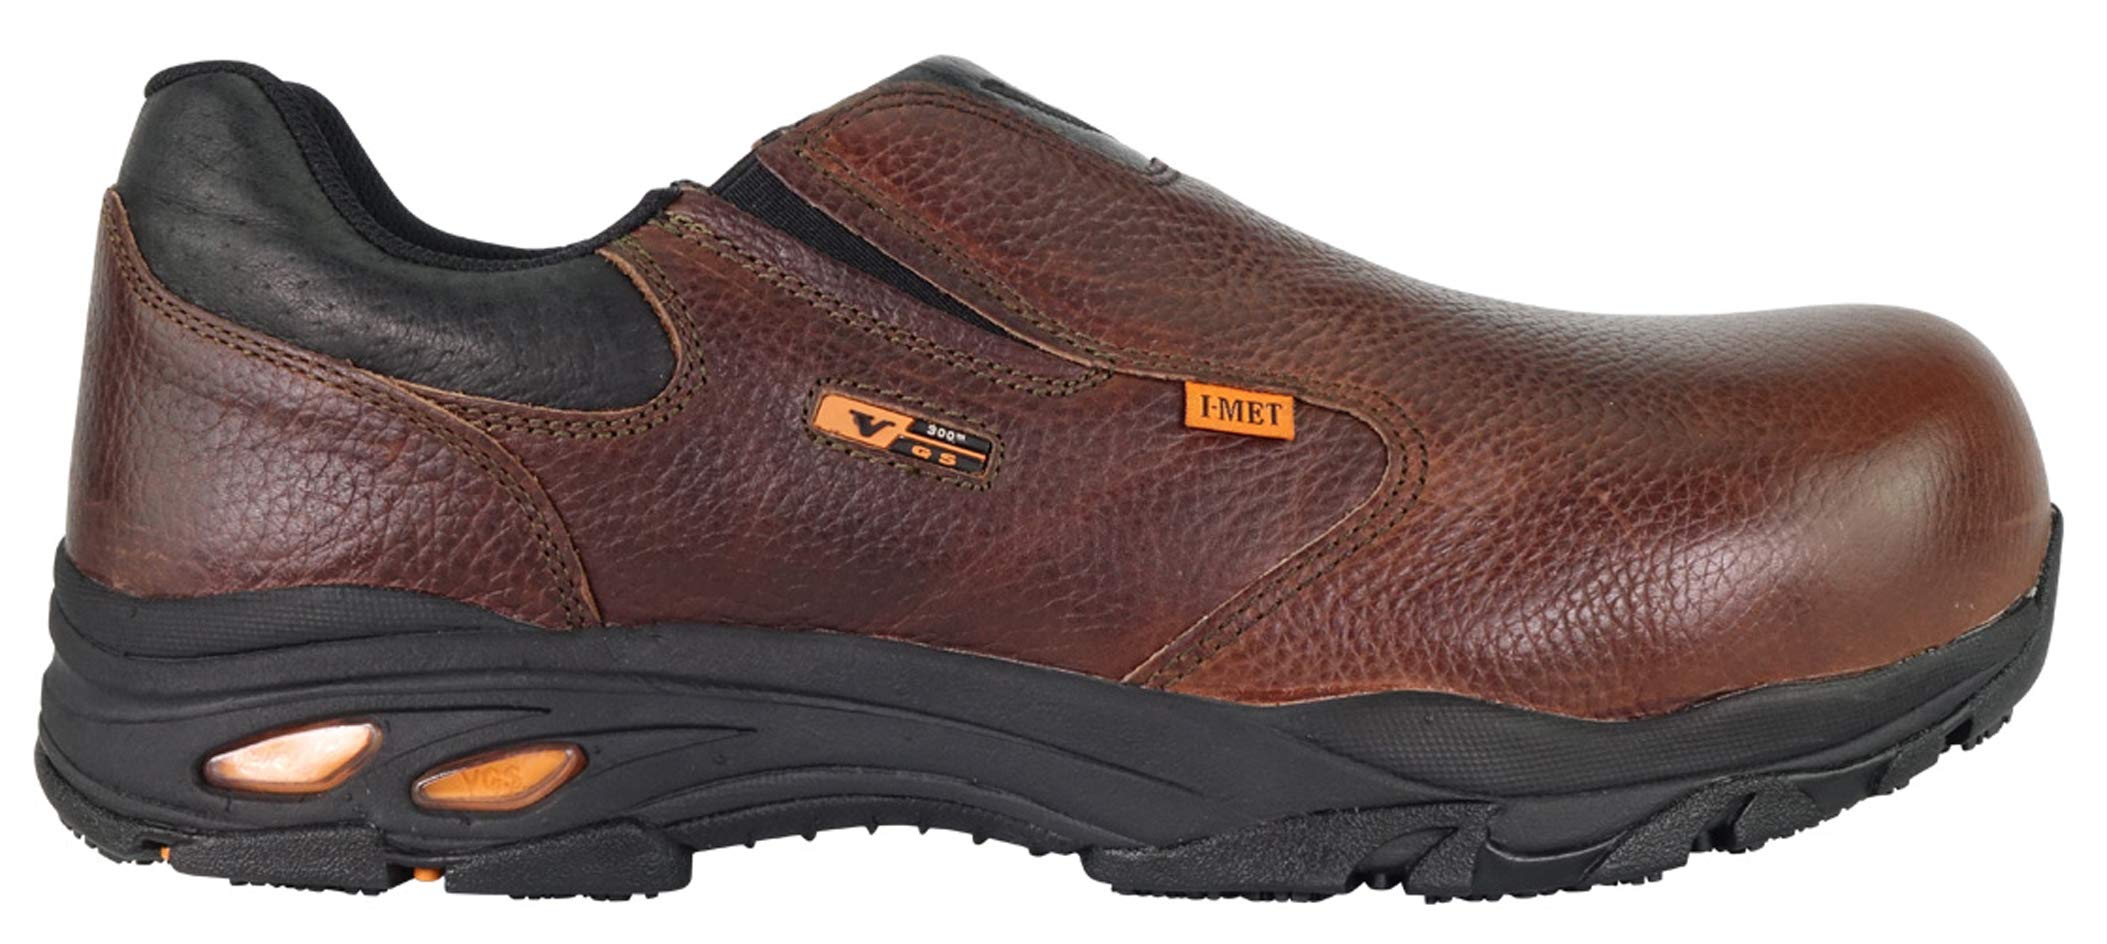 Thorogood Men's 804-4320 I-MET2 Series Composite Safety Toe Slip-On Oxford Shoe, Brown - 6.5 Wide